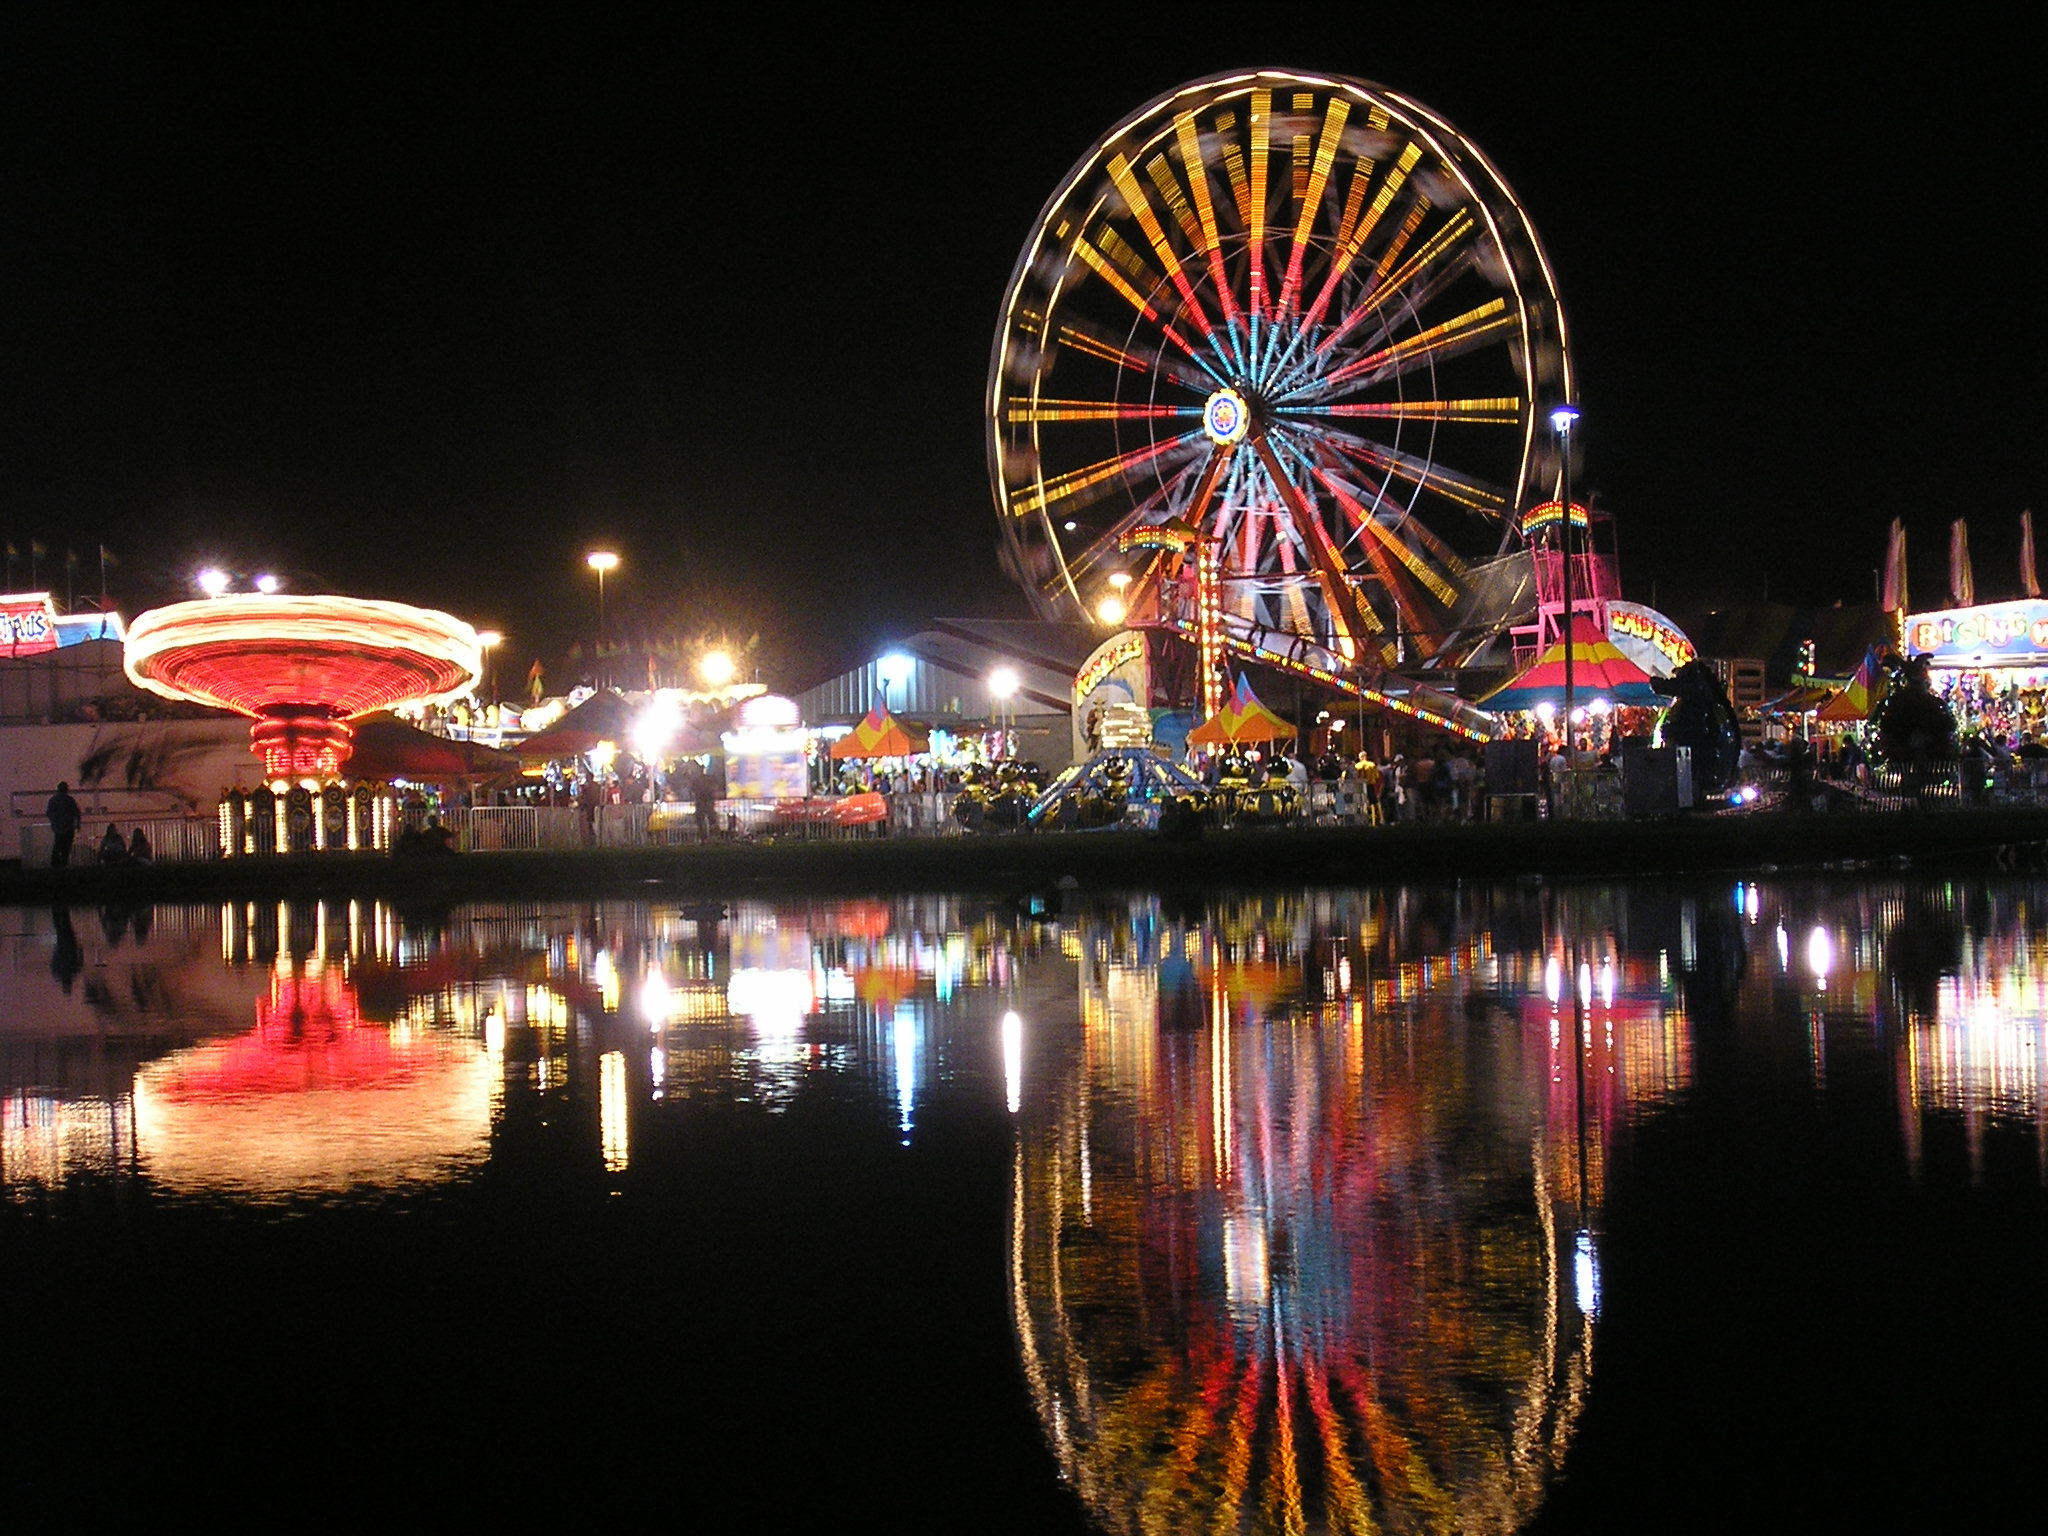 Seaside Fair at night